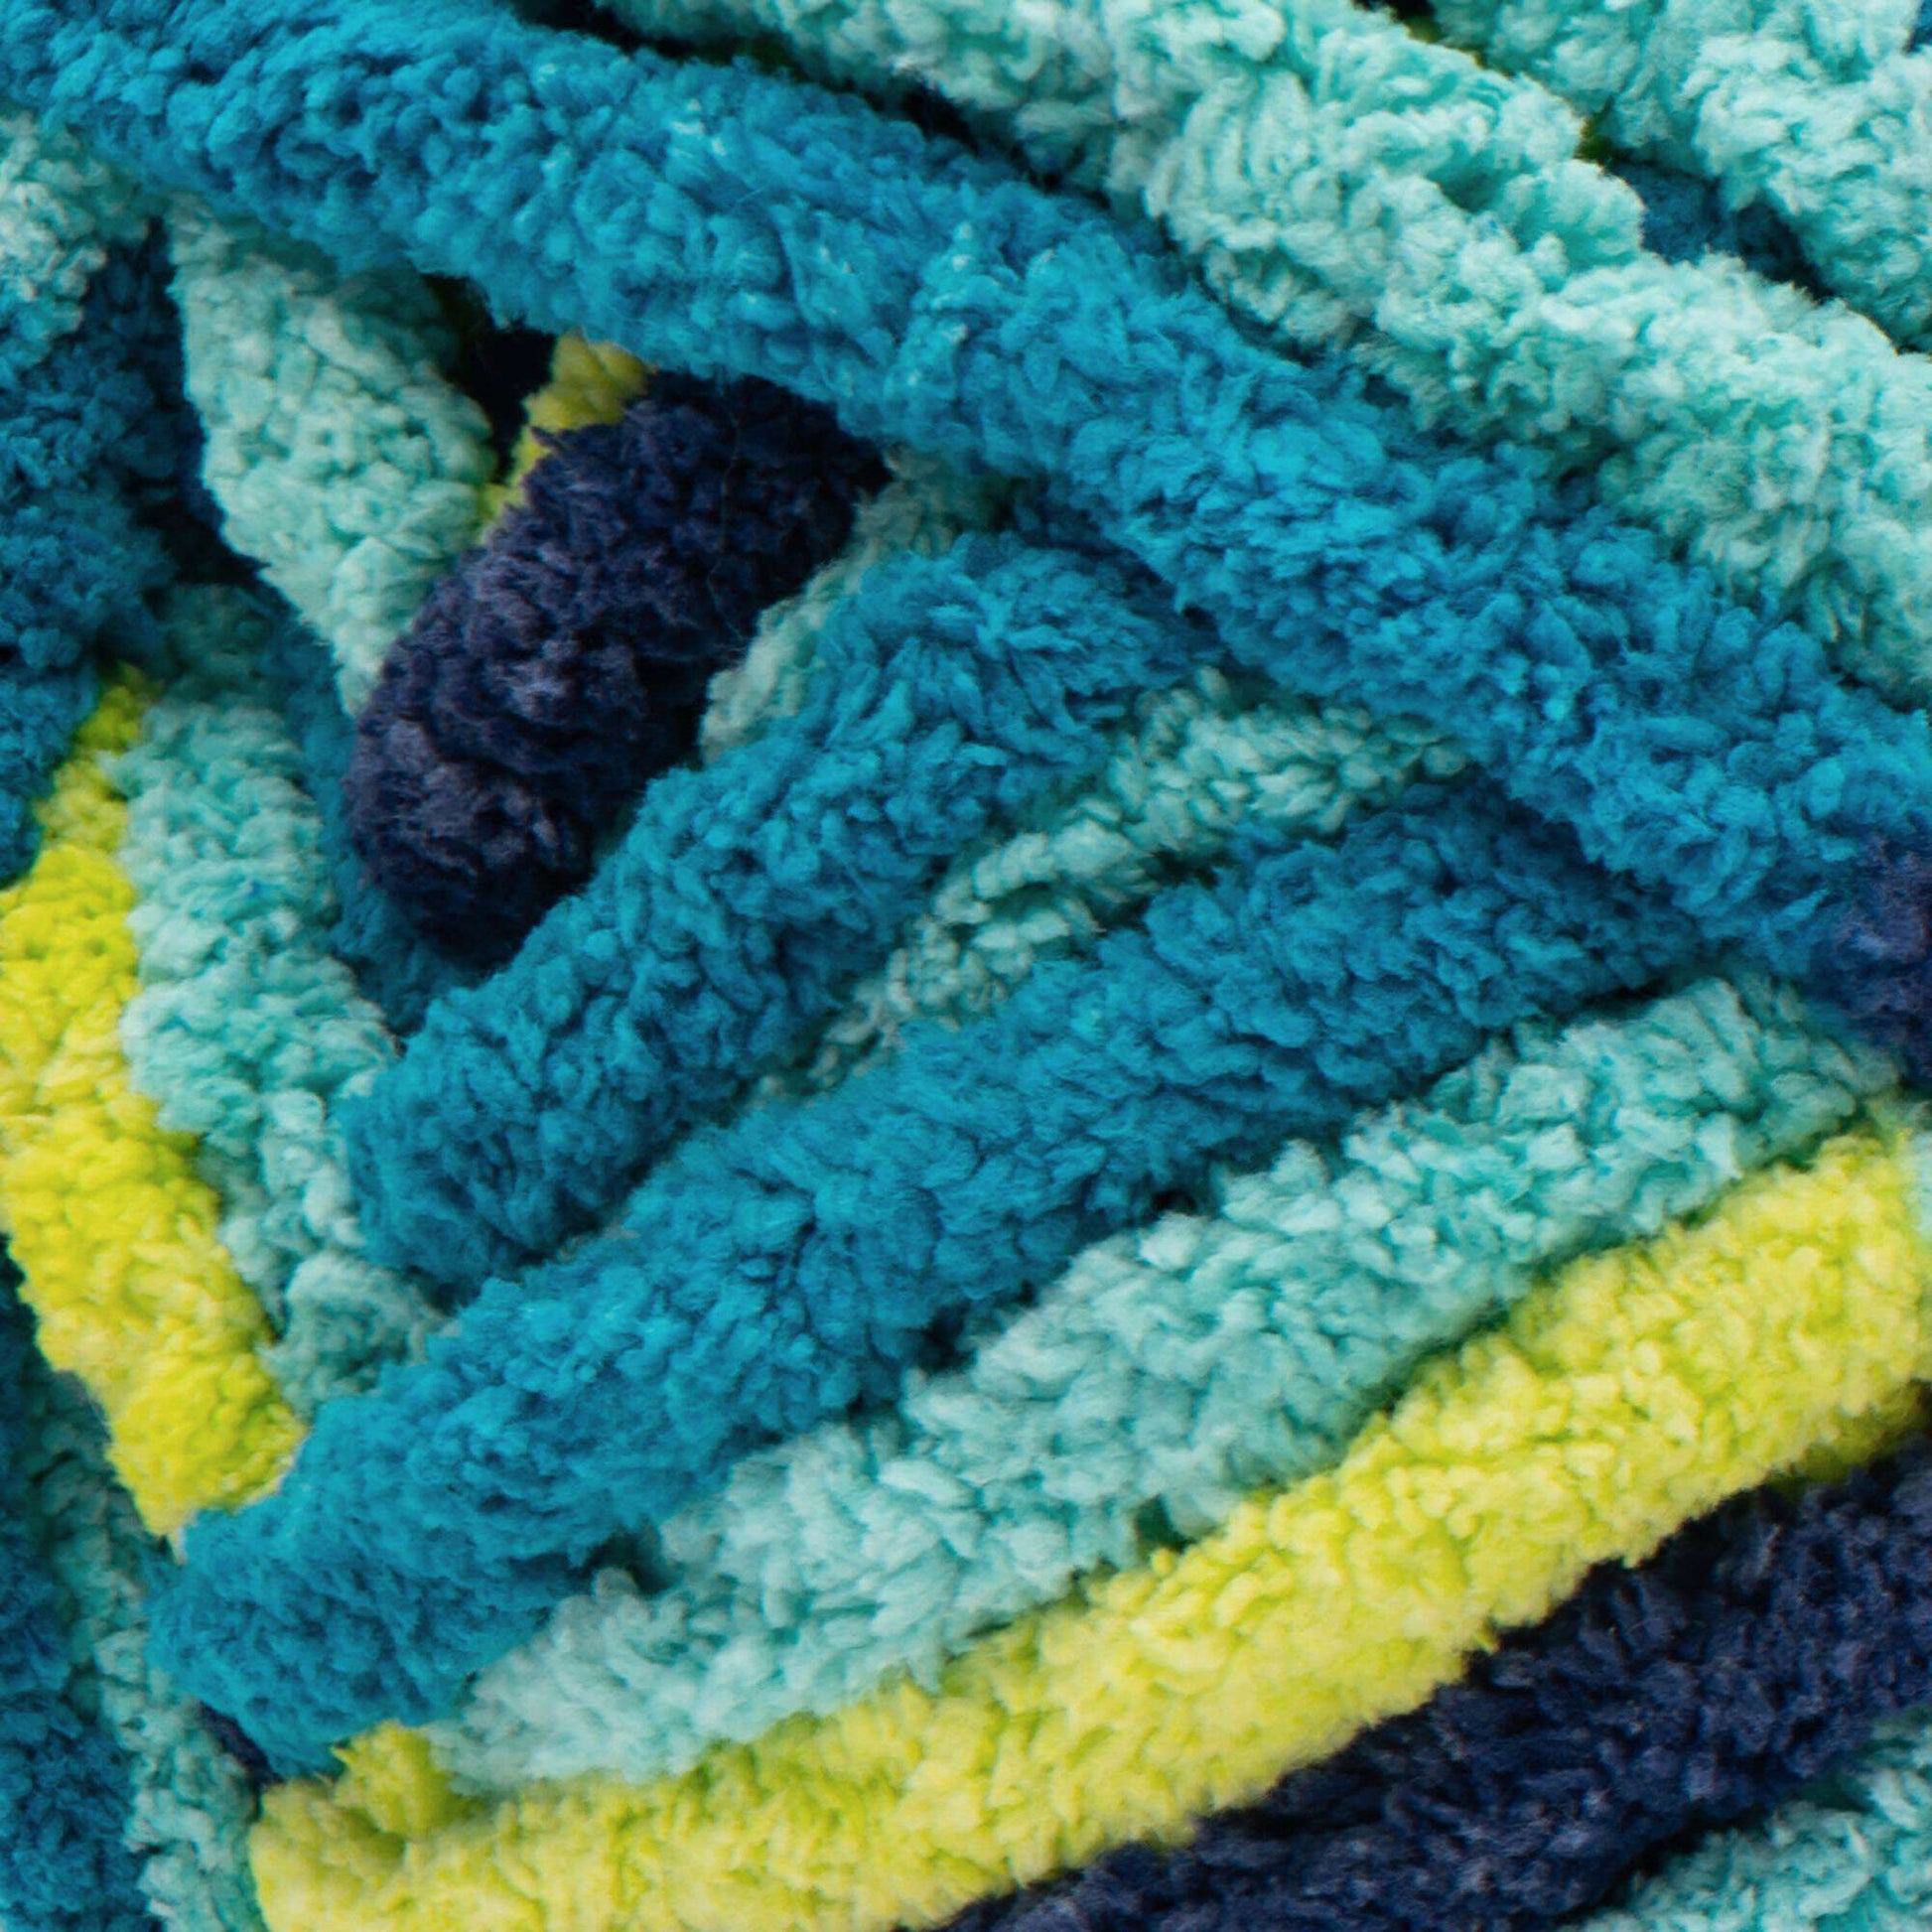 Bernat Blanket Extra Yarn (300g/10.5oz) - Clearance Shades* Seaside Brights Varg